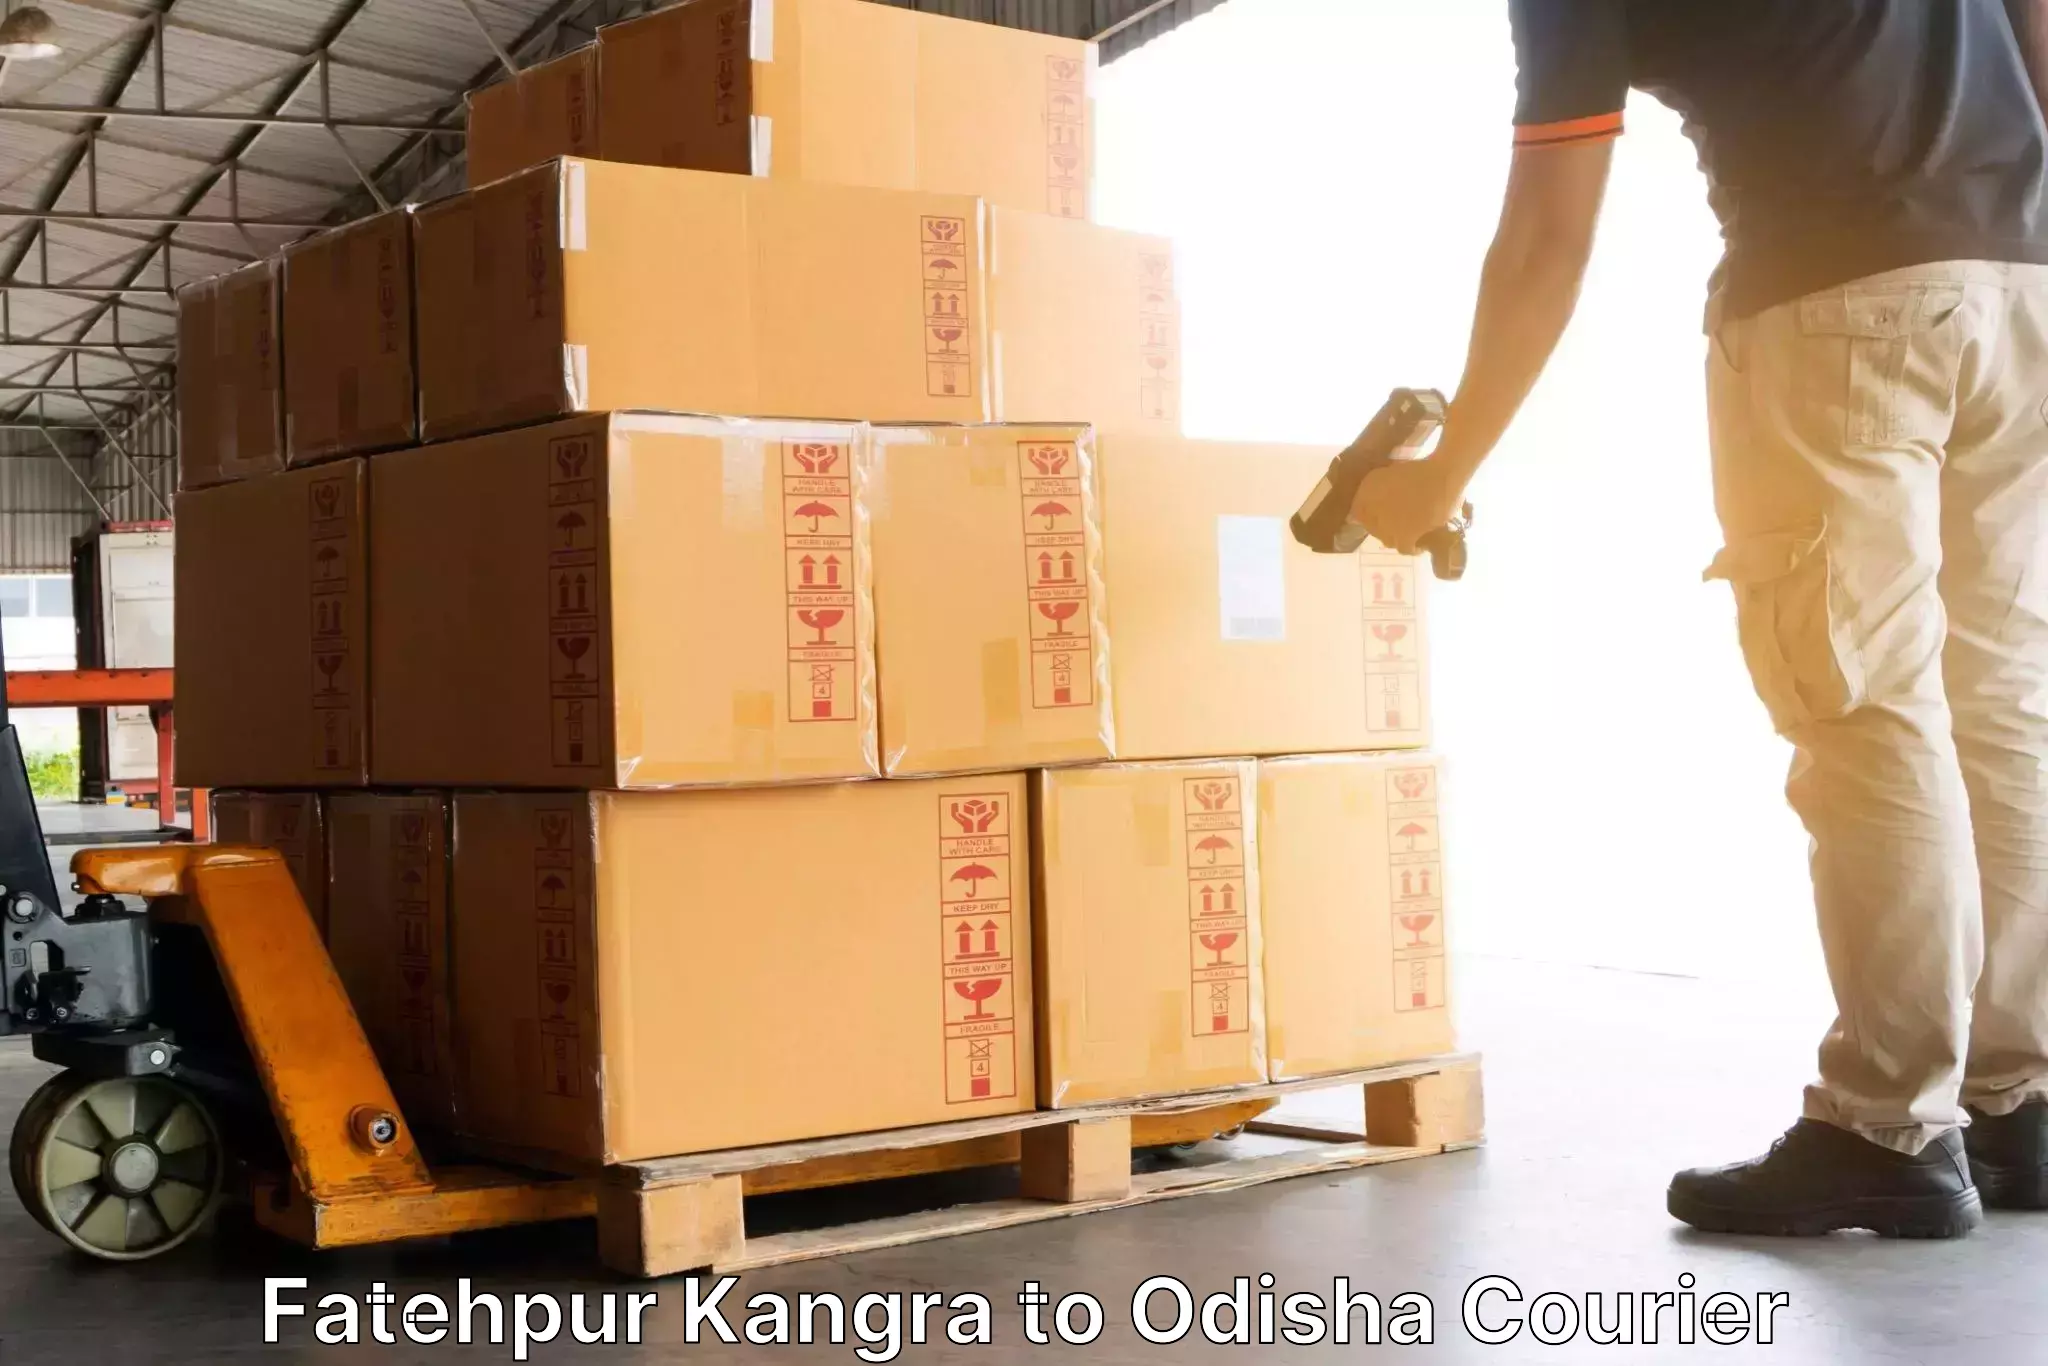 Courier service innovation Fatehpur Kangra to Astaranga